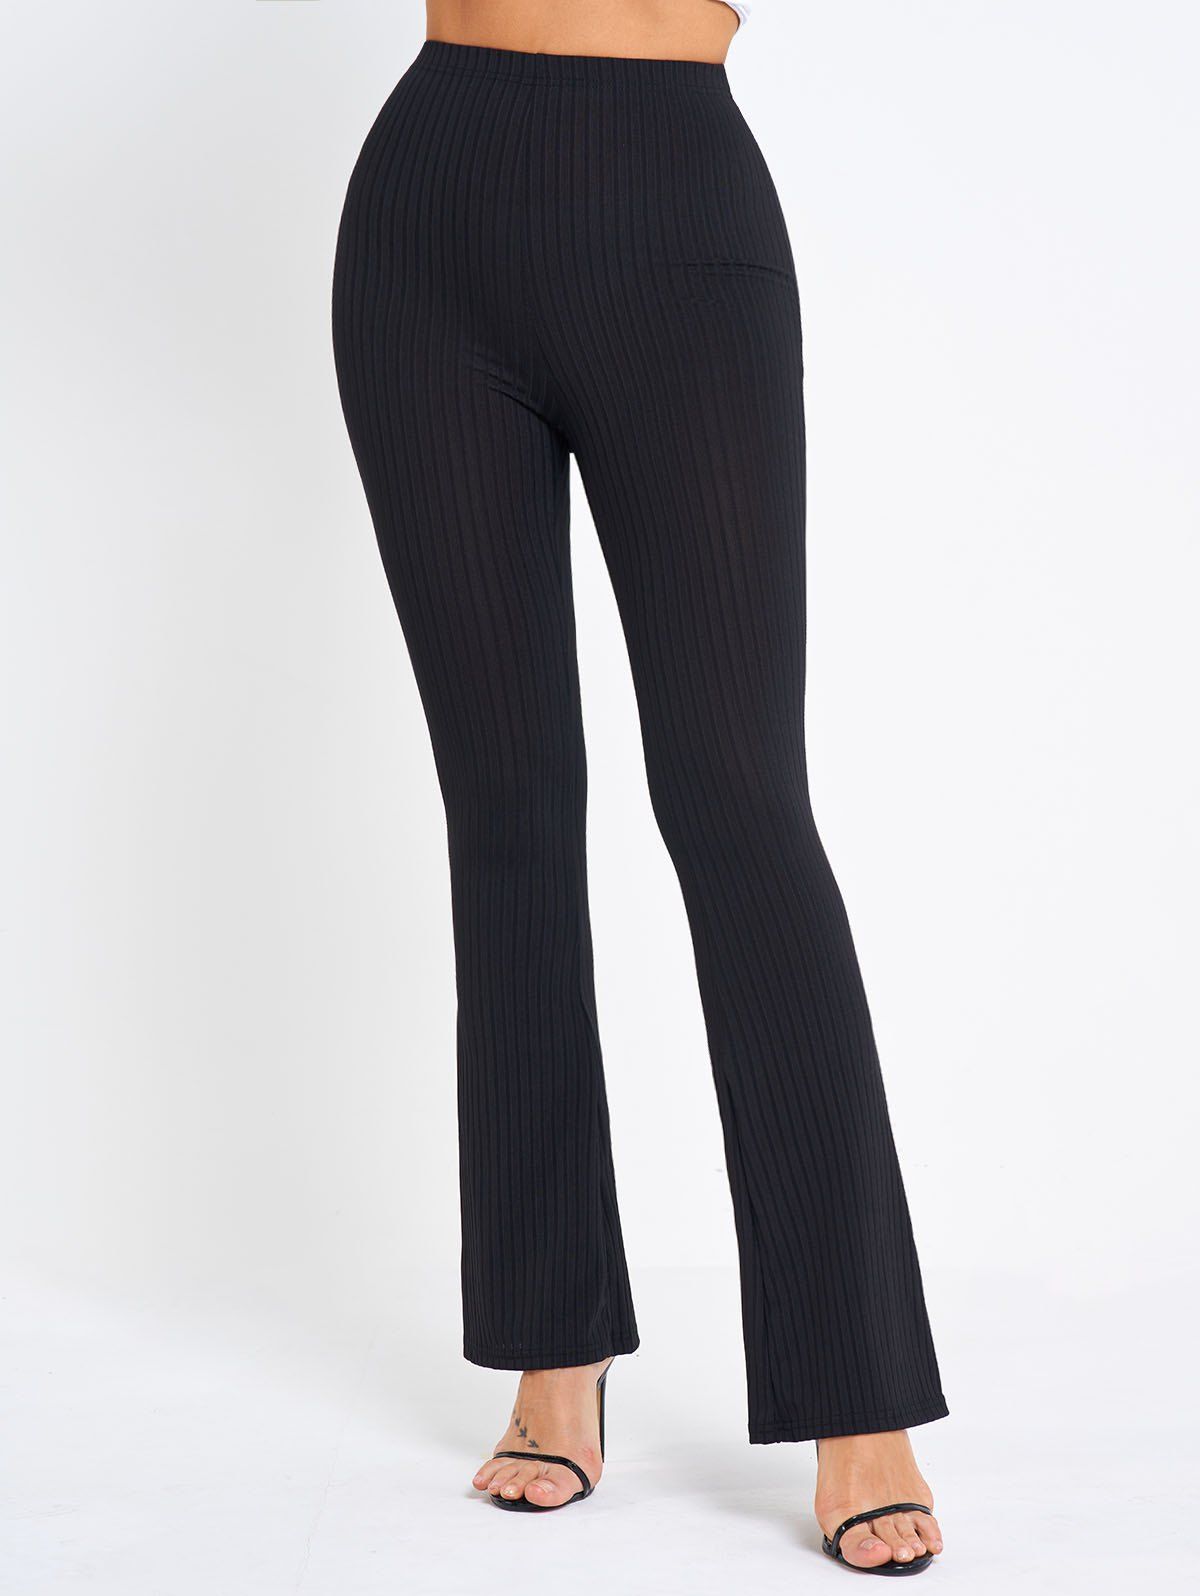 Textured Flare Pants Elastic High Waisted Plain Color Long Pants - BLACK S